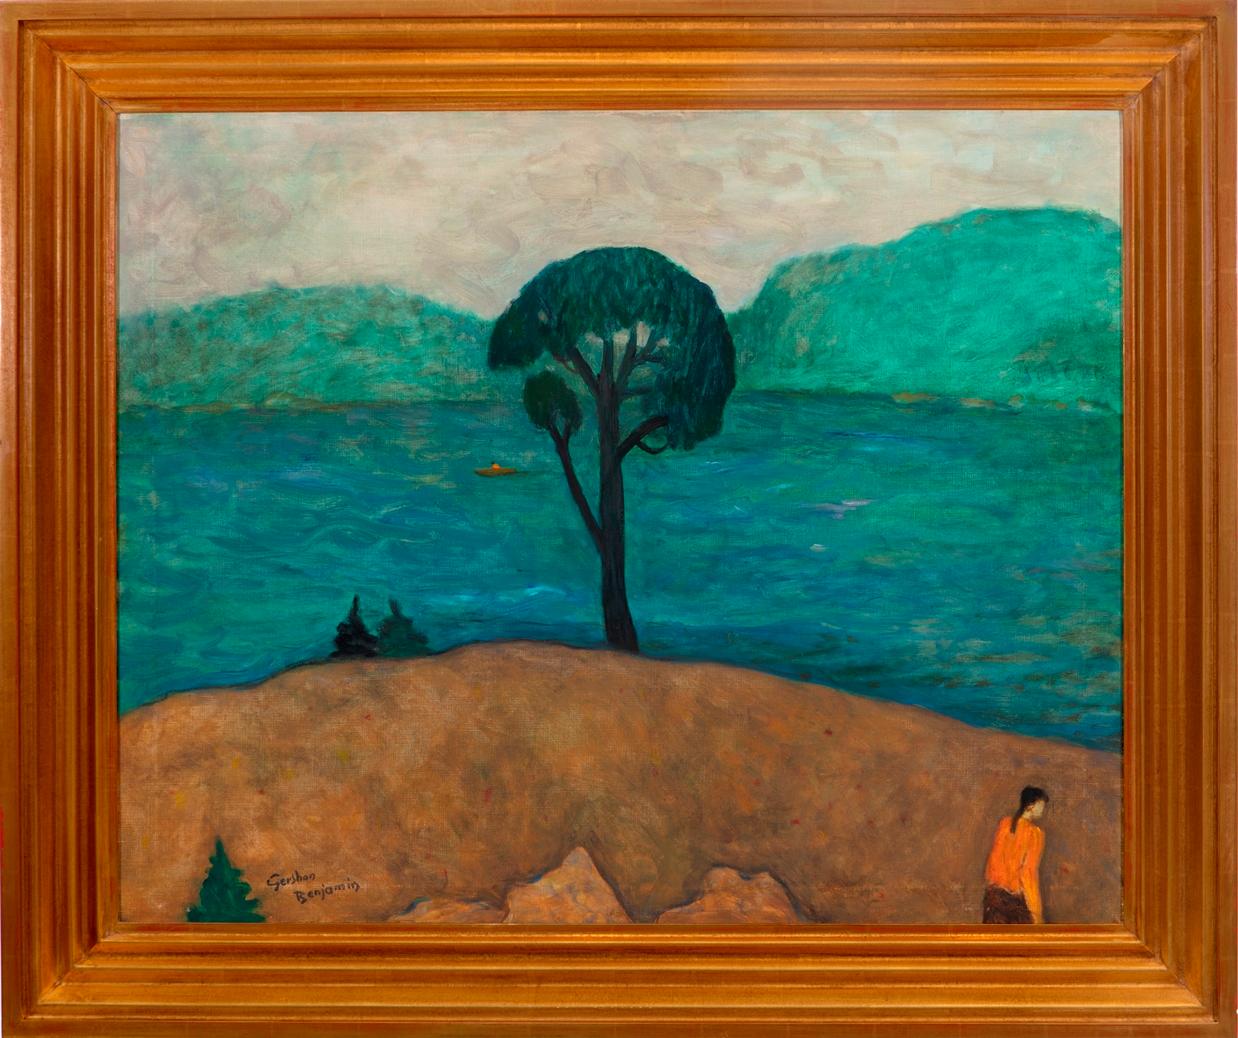 Gershon Benjamin Landscape Painting - "Near the River"